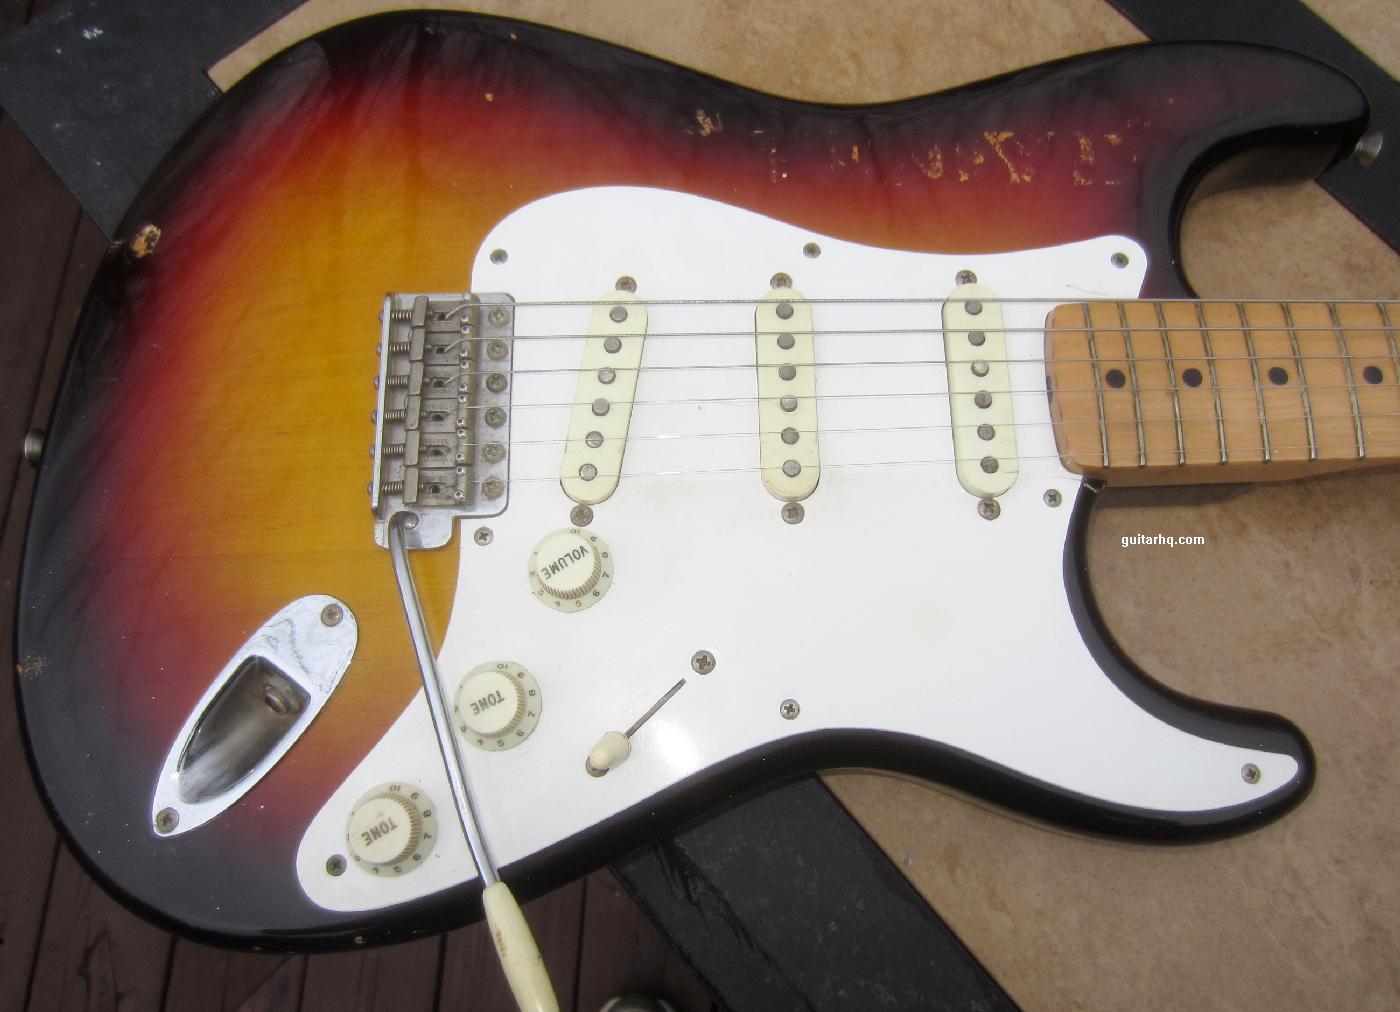 Decompose index assembly 1958 Fender Stratocaster guitar 58 Fender Strat guitar collector info  vintage pre-CBS